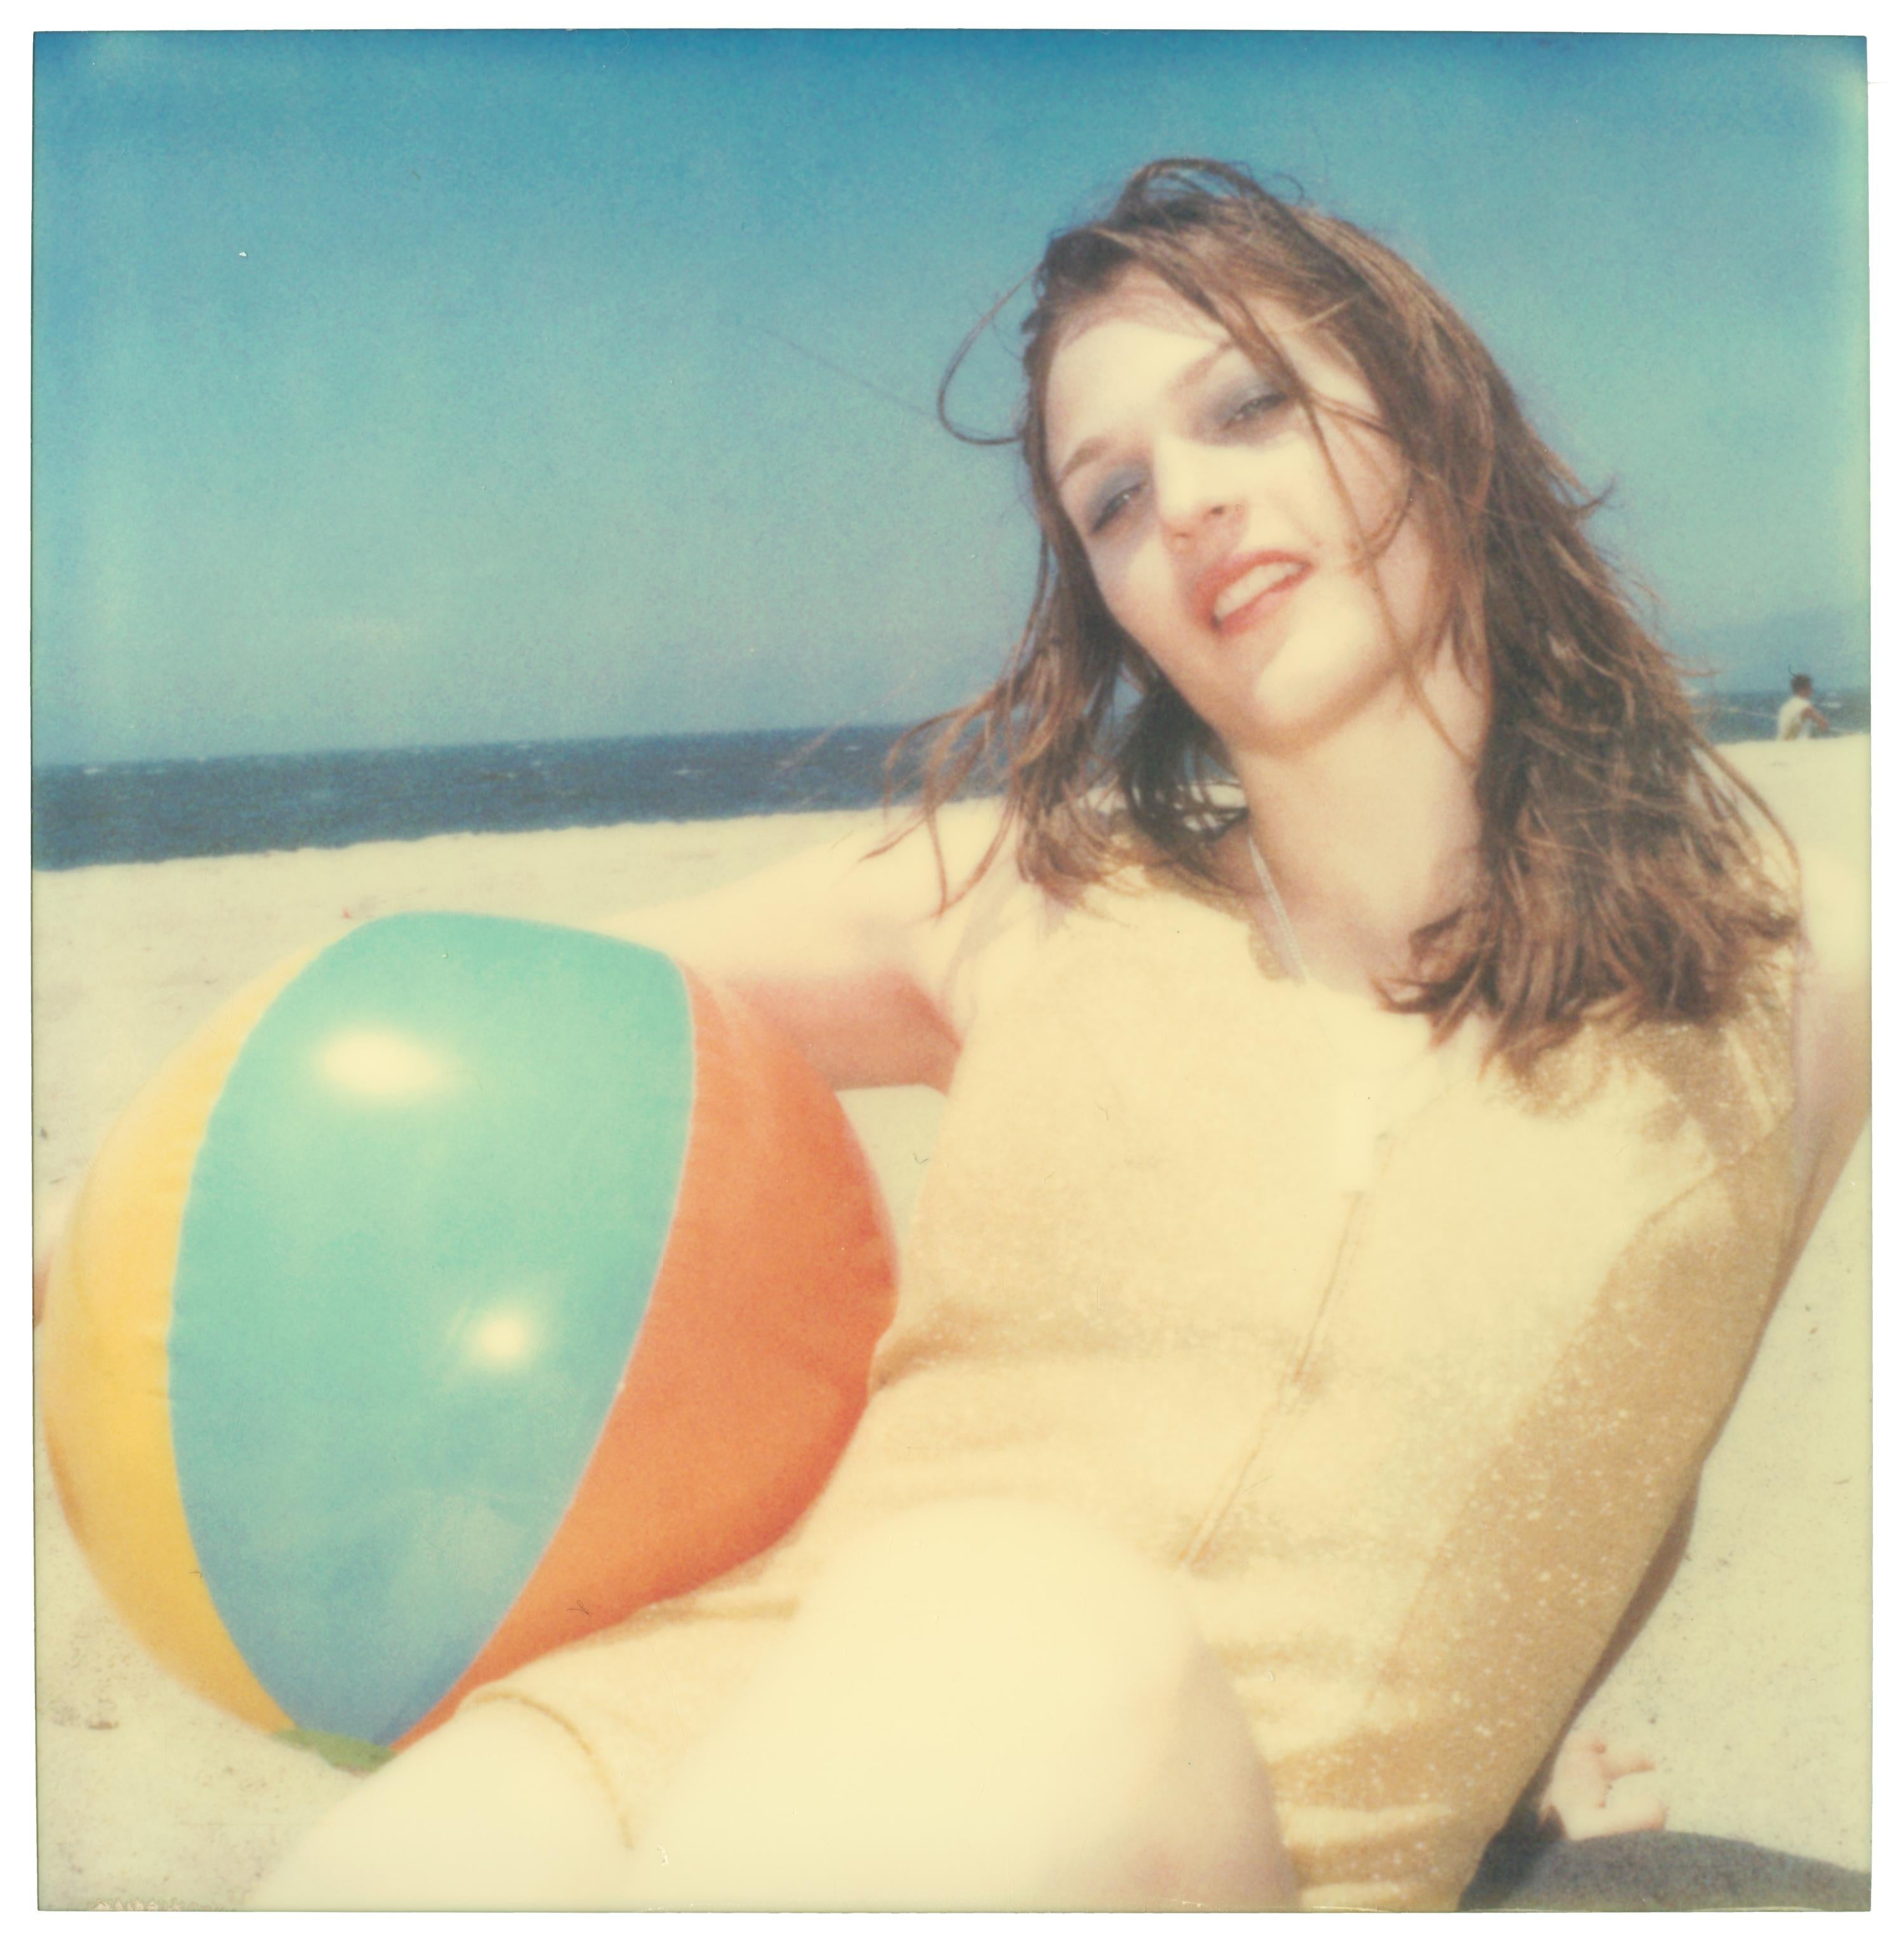 Color Photograph Stefanie Schneider - Untitled (Beachshoot) - Contemporary, Polaroid, Photograph, Women, Beach, Color